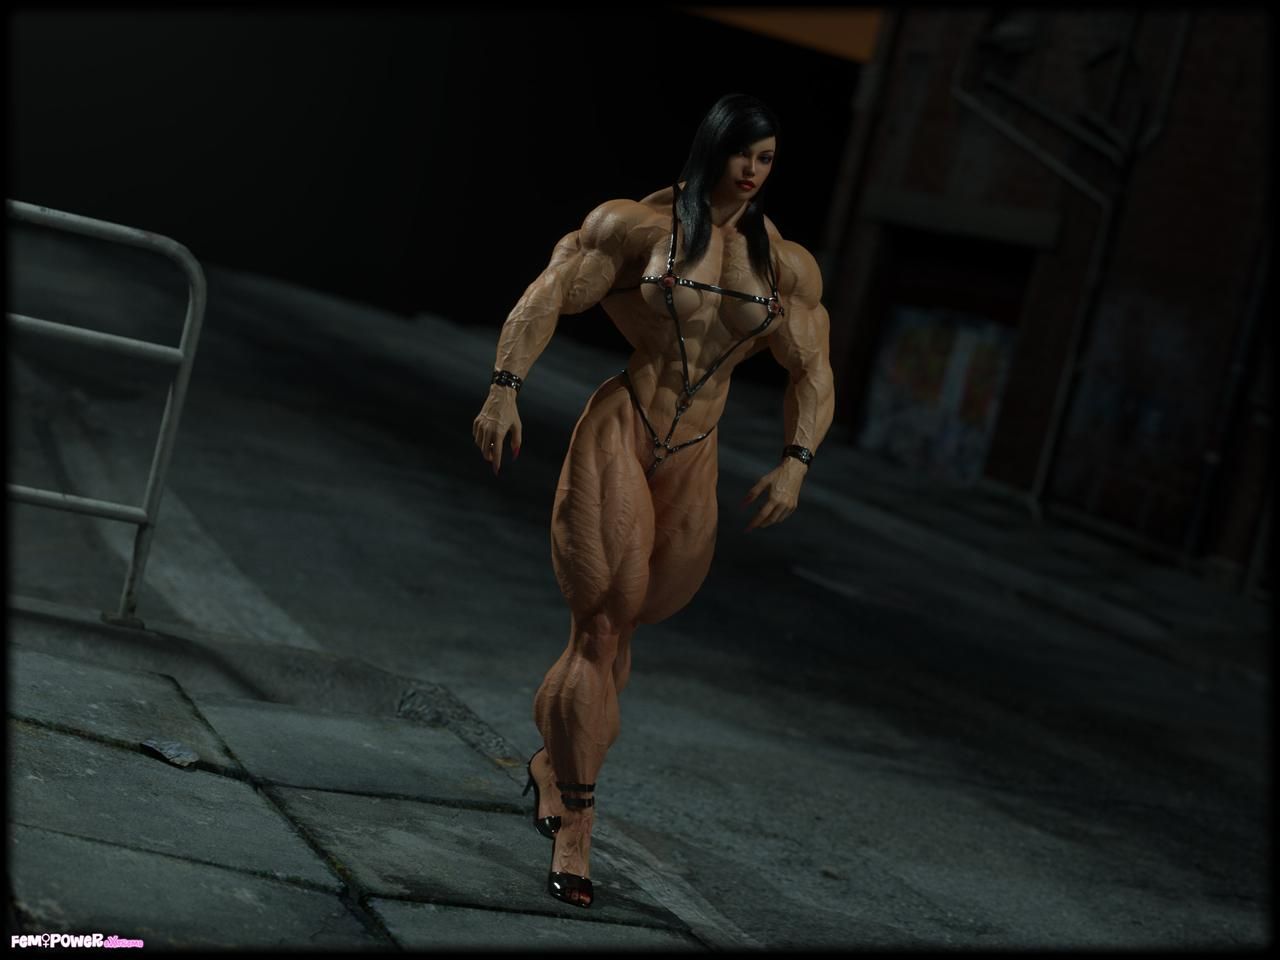 Muscle girls 3D models_ part 2 by Tigersan 111